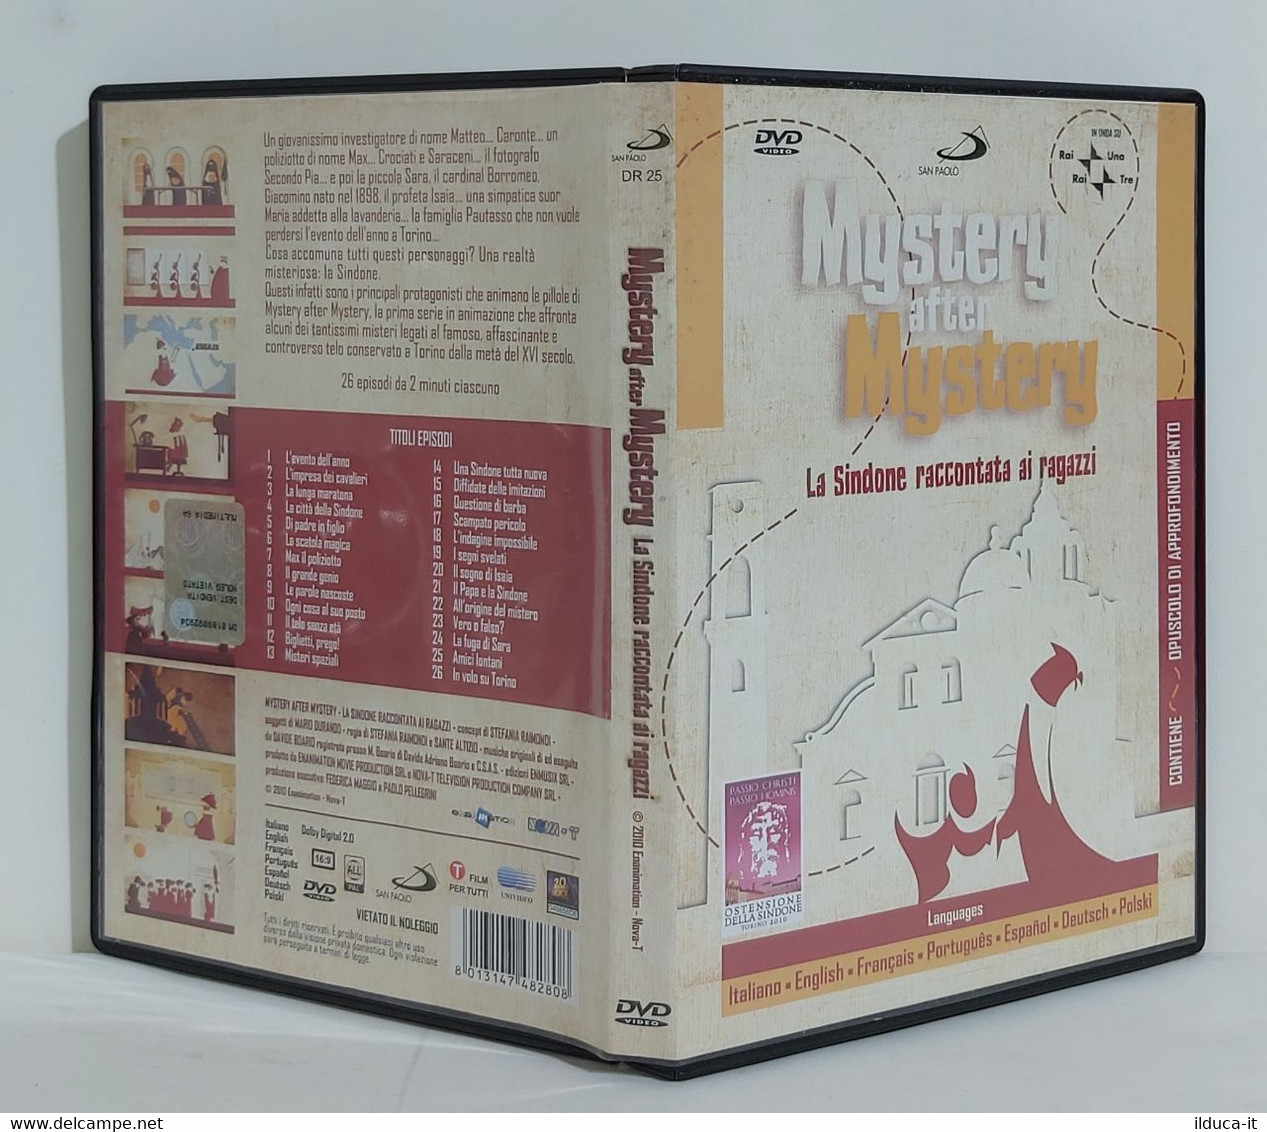 I101828 DVD - Mystery After Mystery - La Sindone Raccontata Ai Ragazzi - Dokumentarfilme